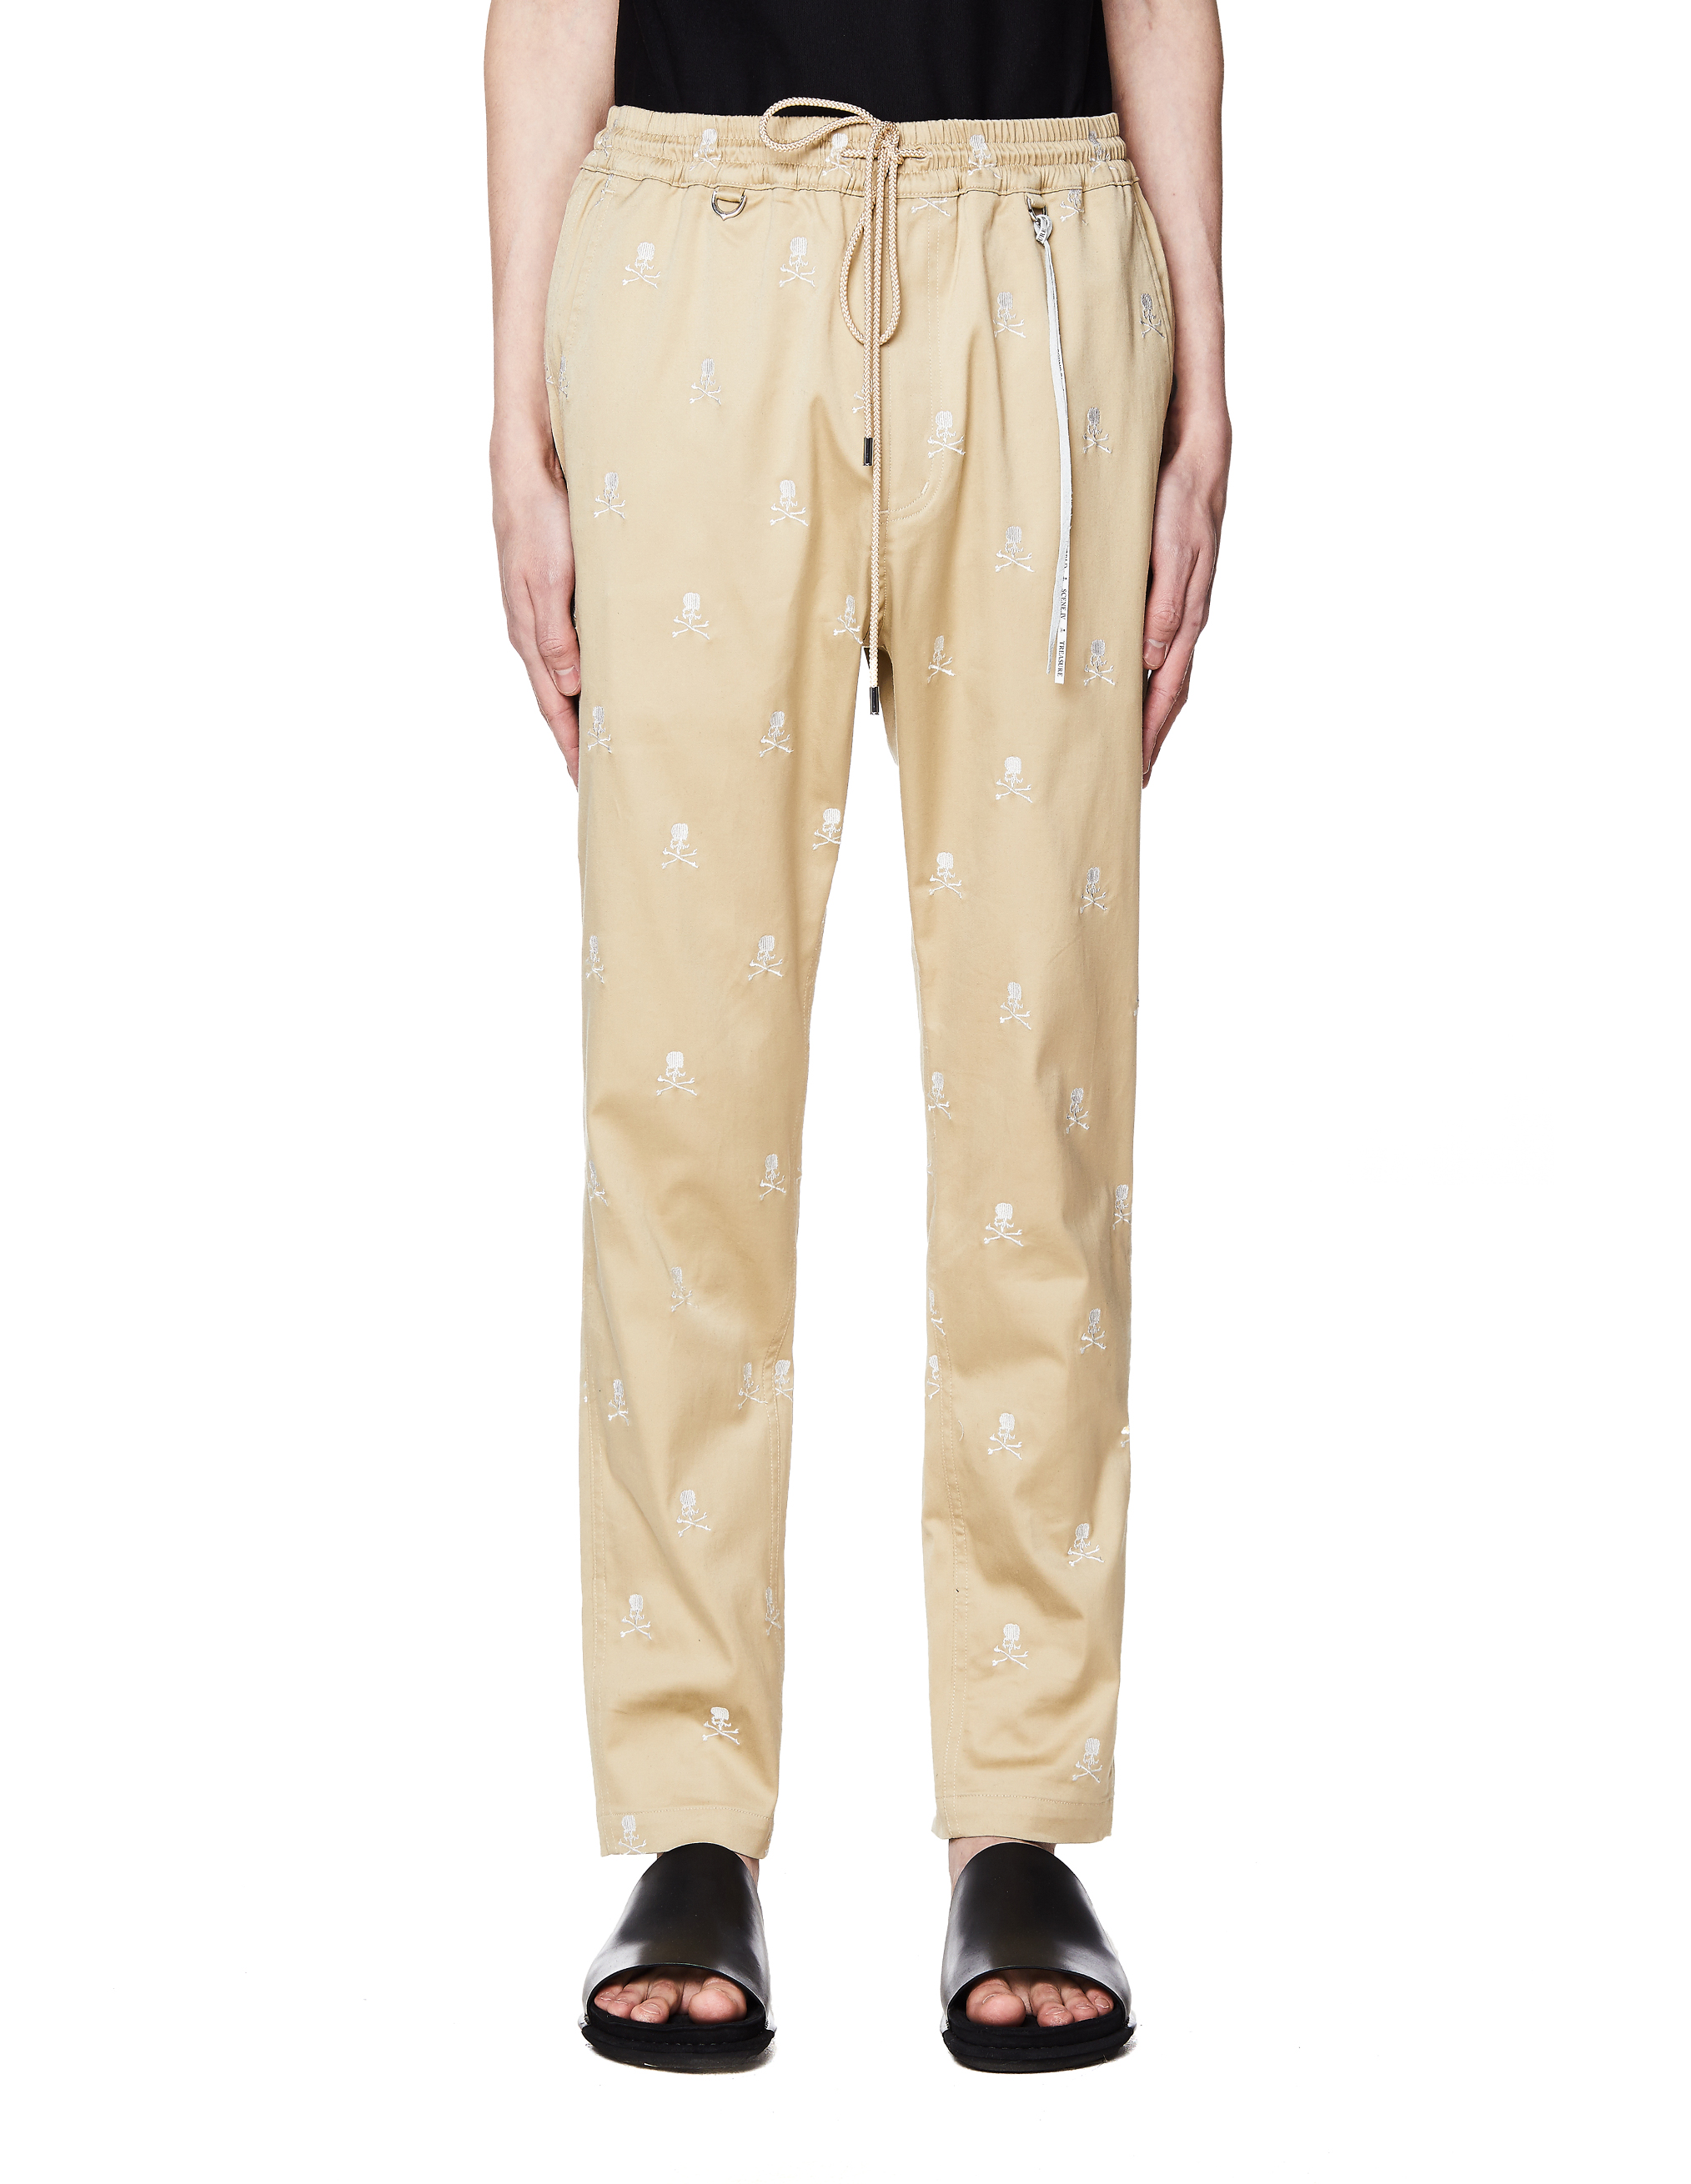 Бежевые брюки с вышивкой - Mastermind WORLD PA014-003/beige